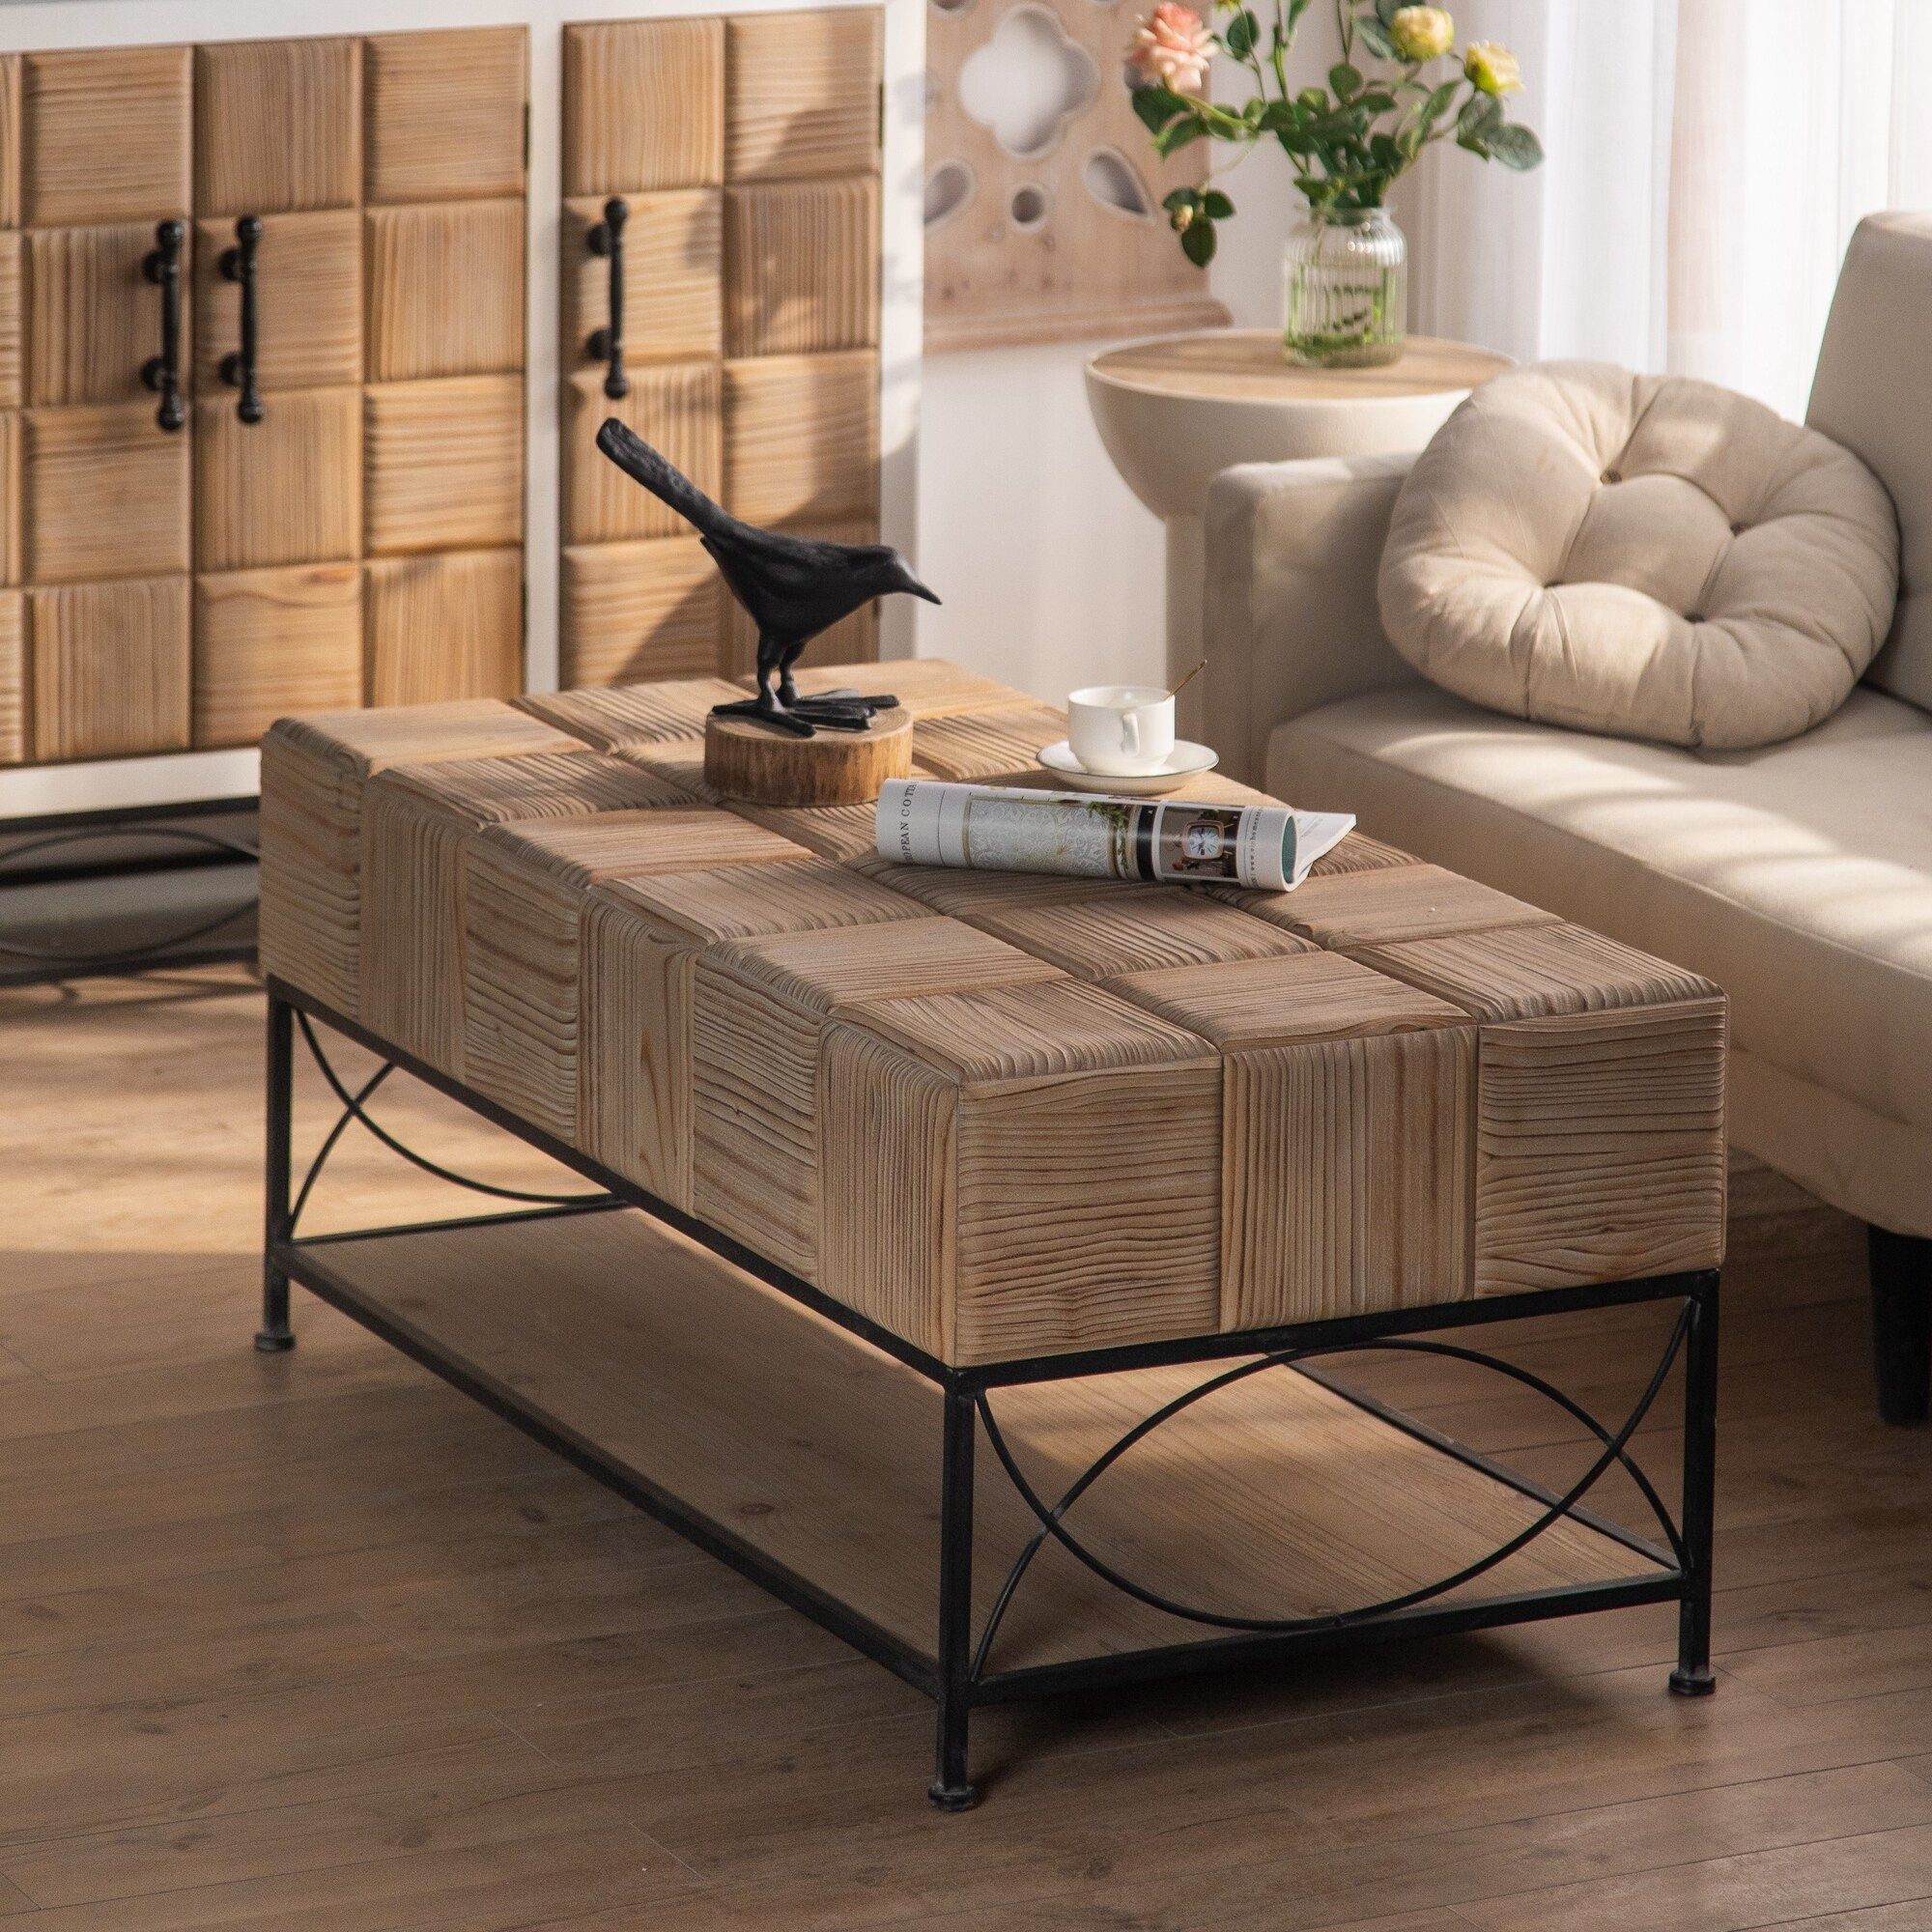 Retro Square Coffee Table W/grid Splicing Design & Open Storage Shelf – Bed  Bath & Beyond – 39098823 In Coffee Tables With Open Storage Shelves (View 6 of 15)